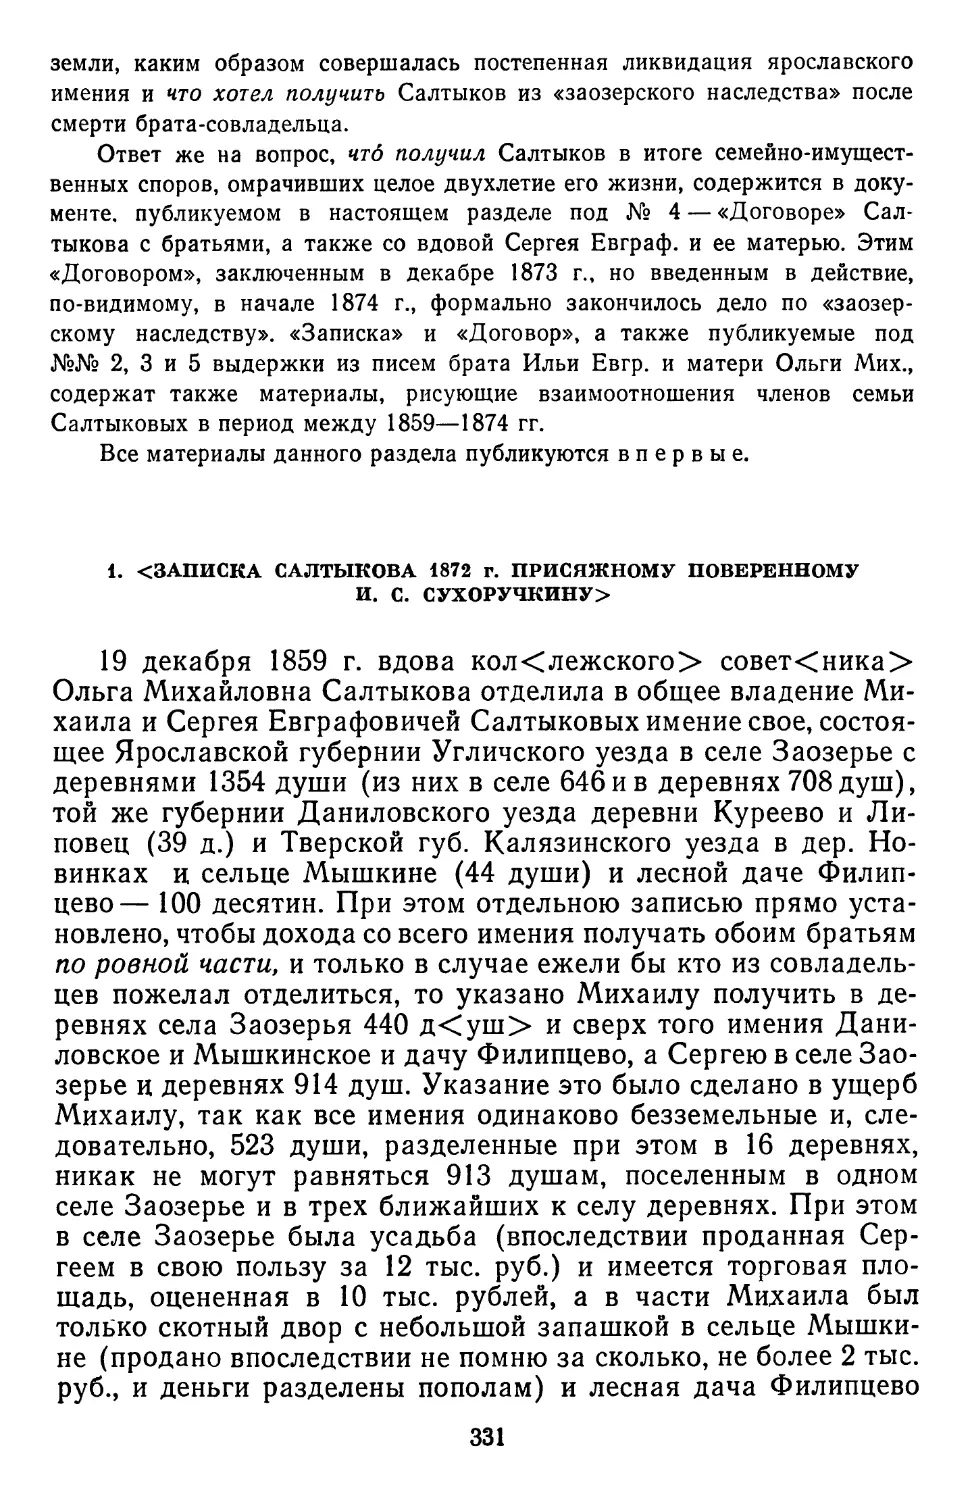 1.<3аписка Салтыкова 1872 г. присяжному поверенному И. С. Сухоручкину> .